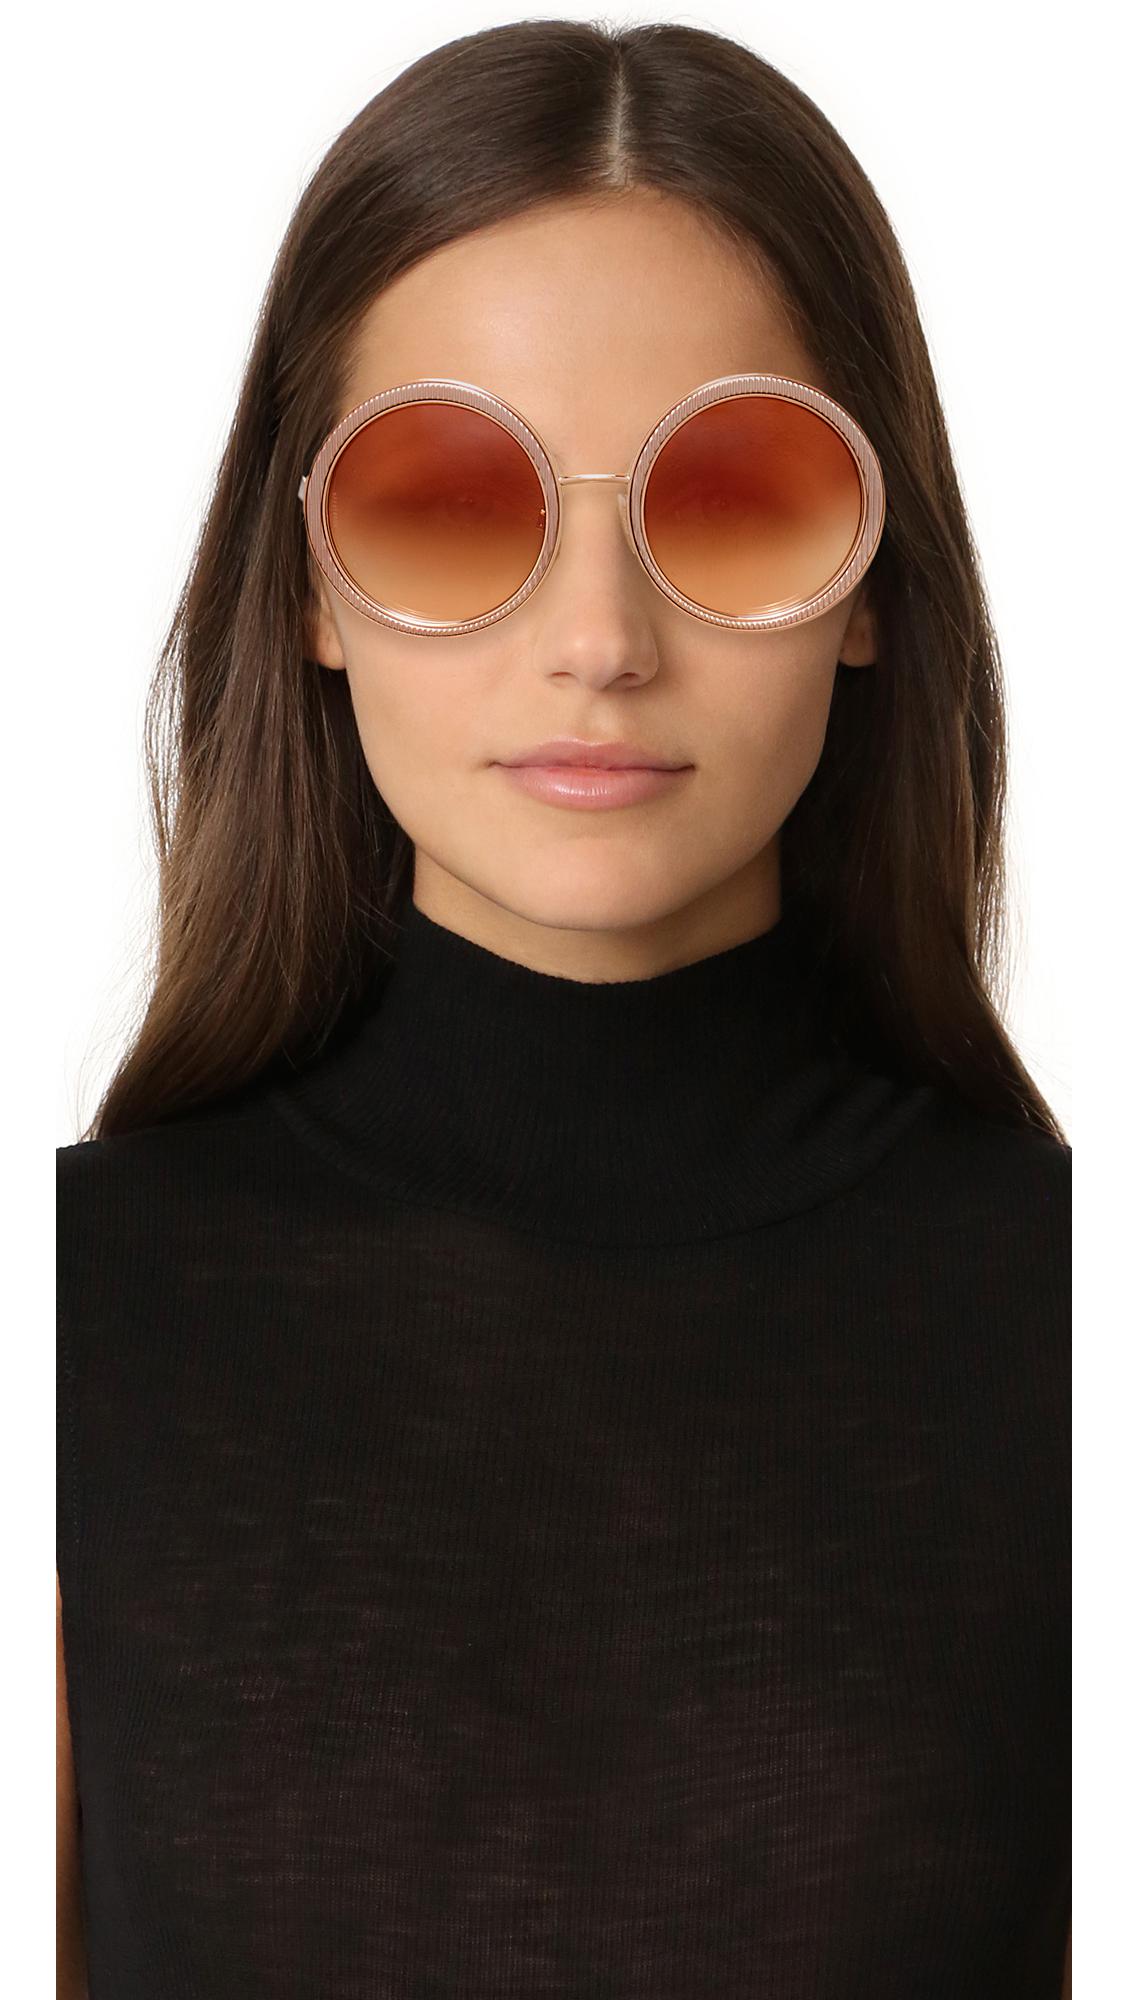 Dolce & Gabbana Grosgrain Round Sunglasses in Pink Gold/Pink (Pink) - Lyst